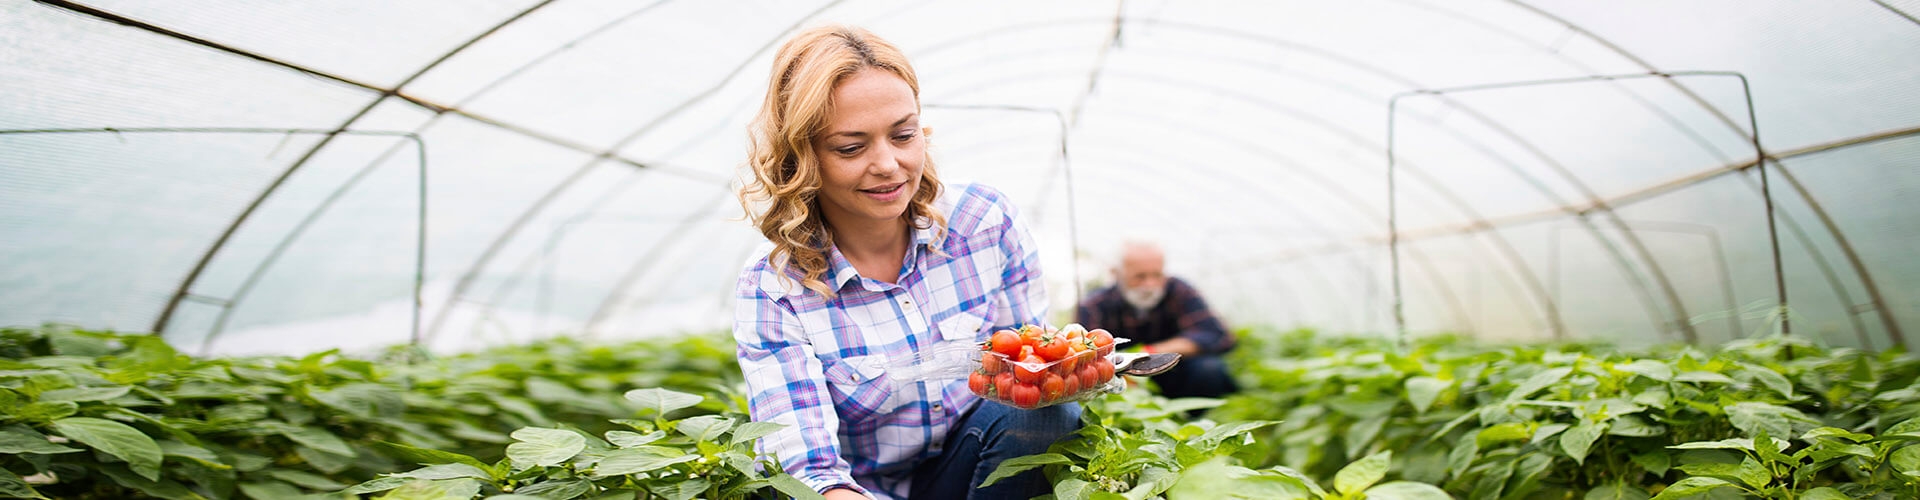  SAECA - Trámites con SAECA - Chica de camisa de cuadros recolectando cultivo de tomates en invernadero